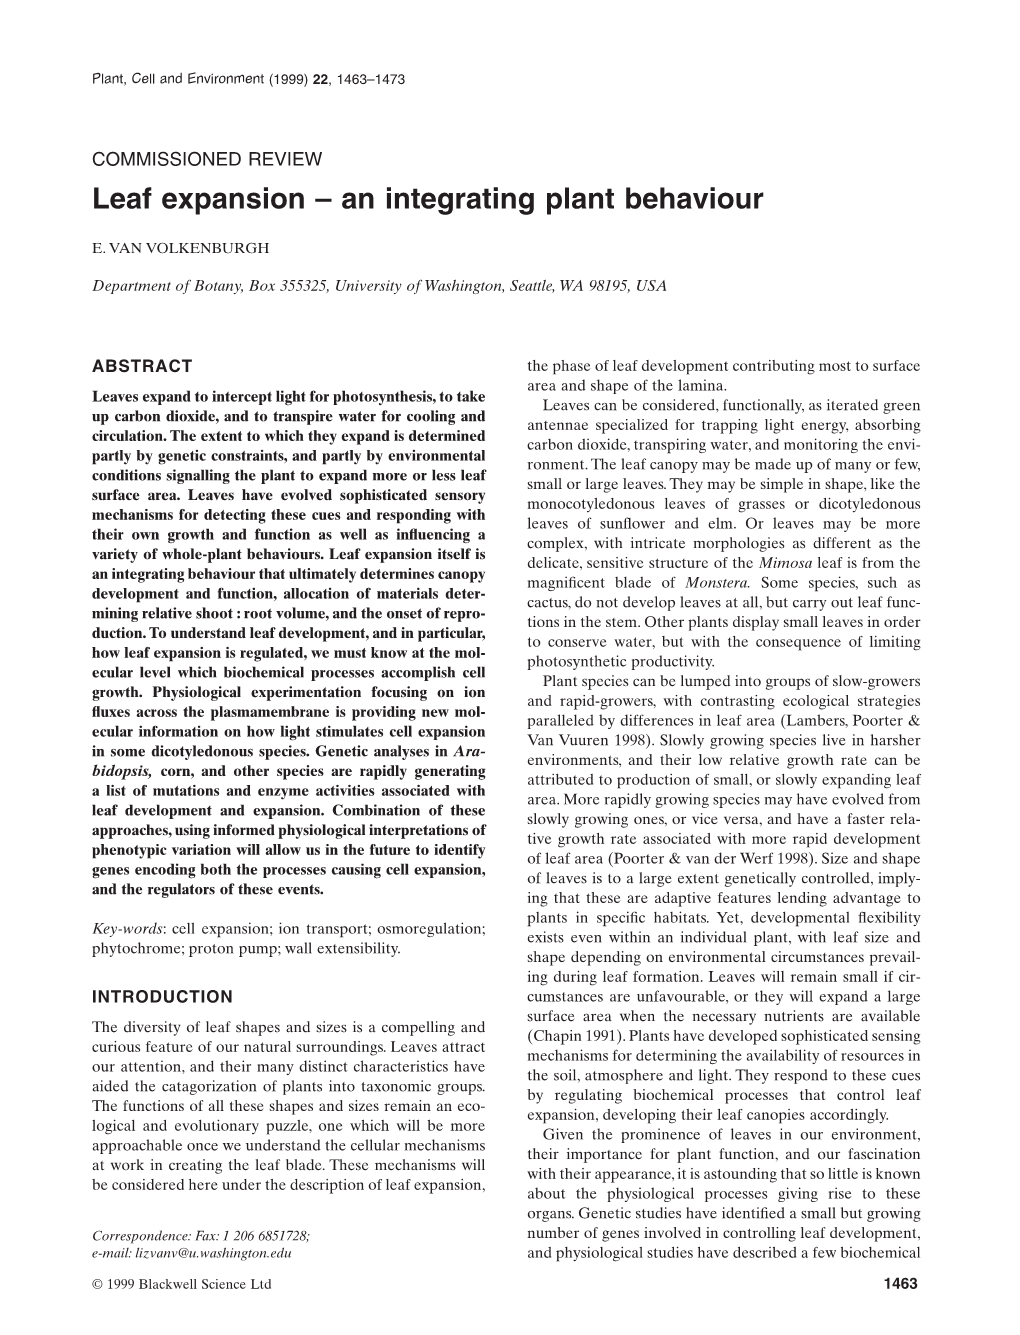 Leaf Expansion – an Integrating Plant Behaviour